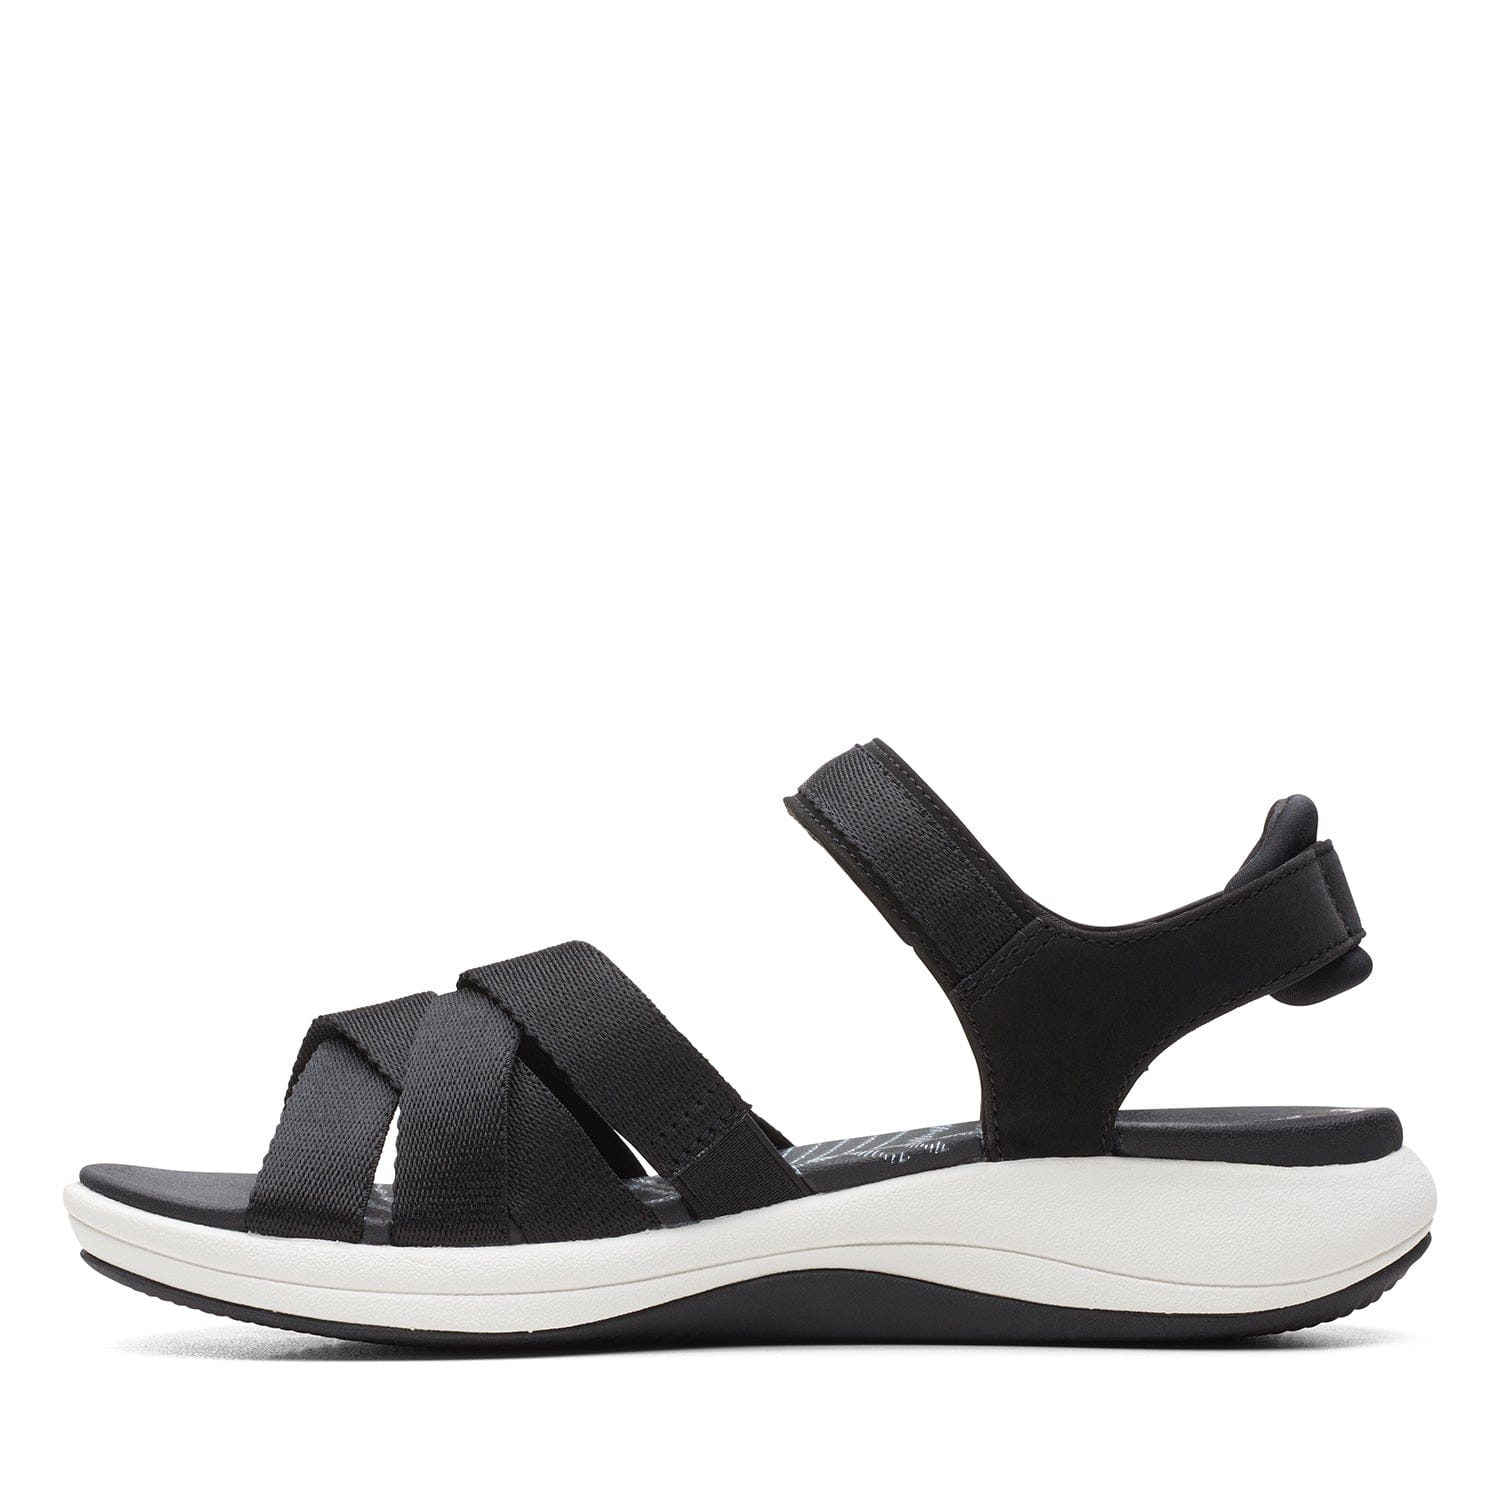 Clarks Mira Tide Sandals - Black - 261653414 - D Width (Standard Fit)